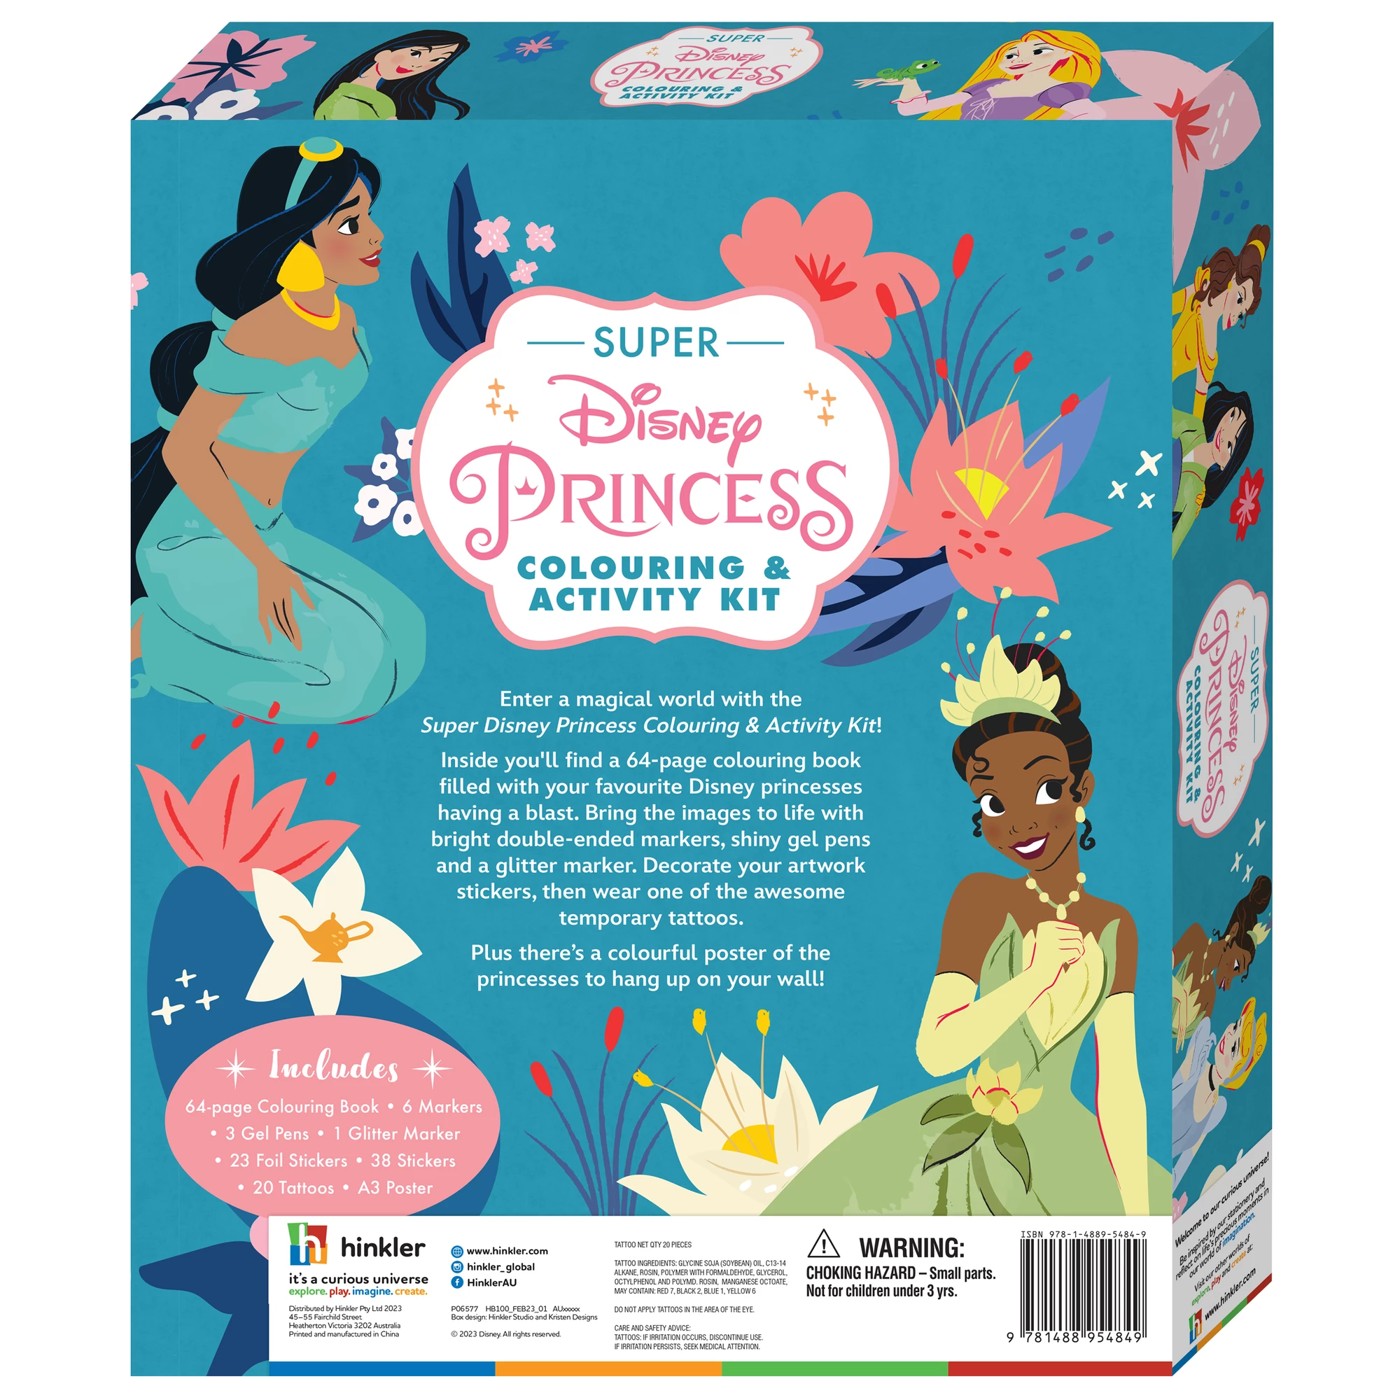 Super Disney Princess Colouring & Activity Kit